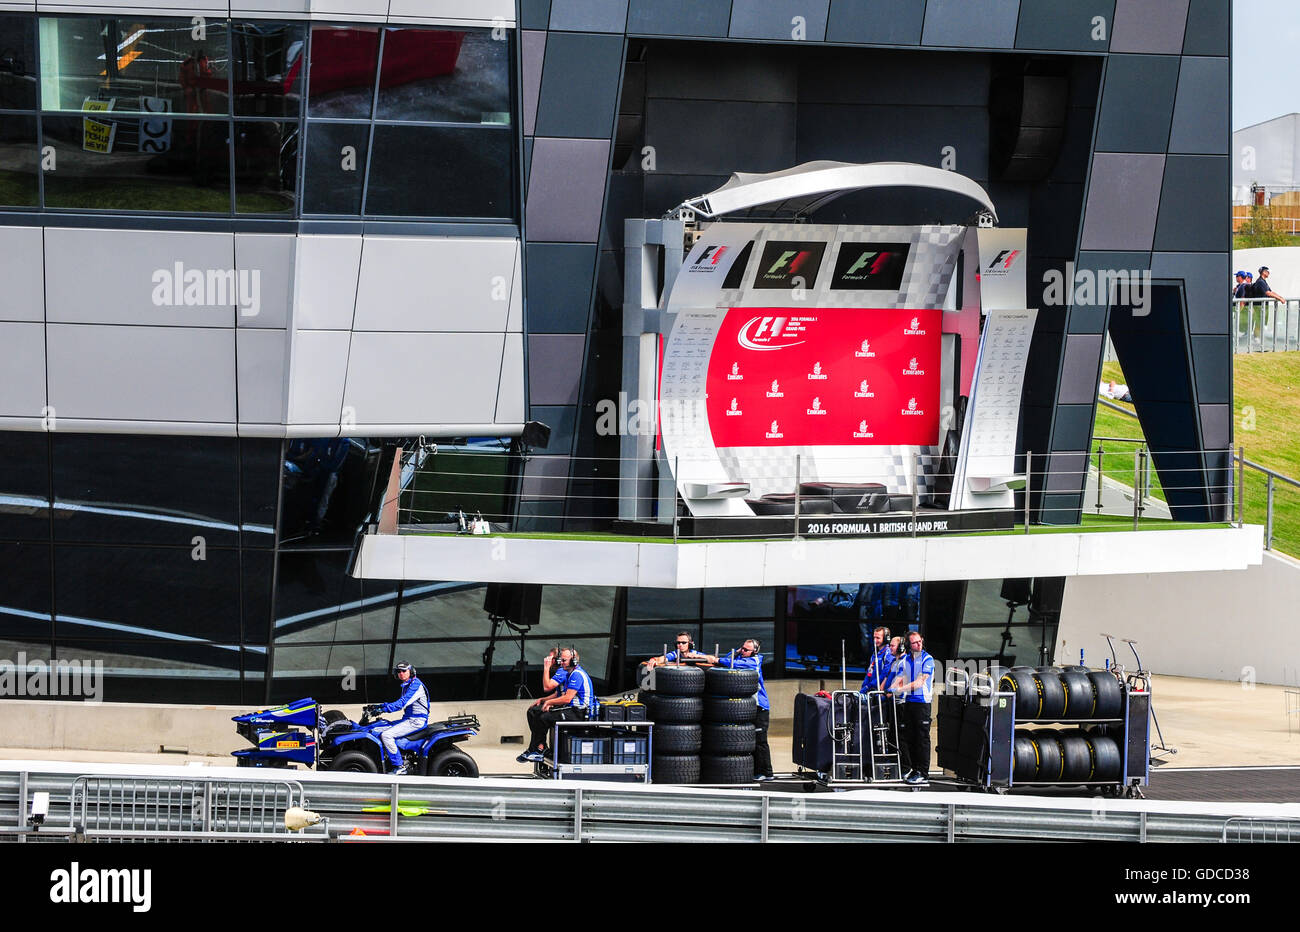 Motorsport Images on X: Trophy celebration on the podium at Silverstone #f1  #Silverstone #BritishGP  / X